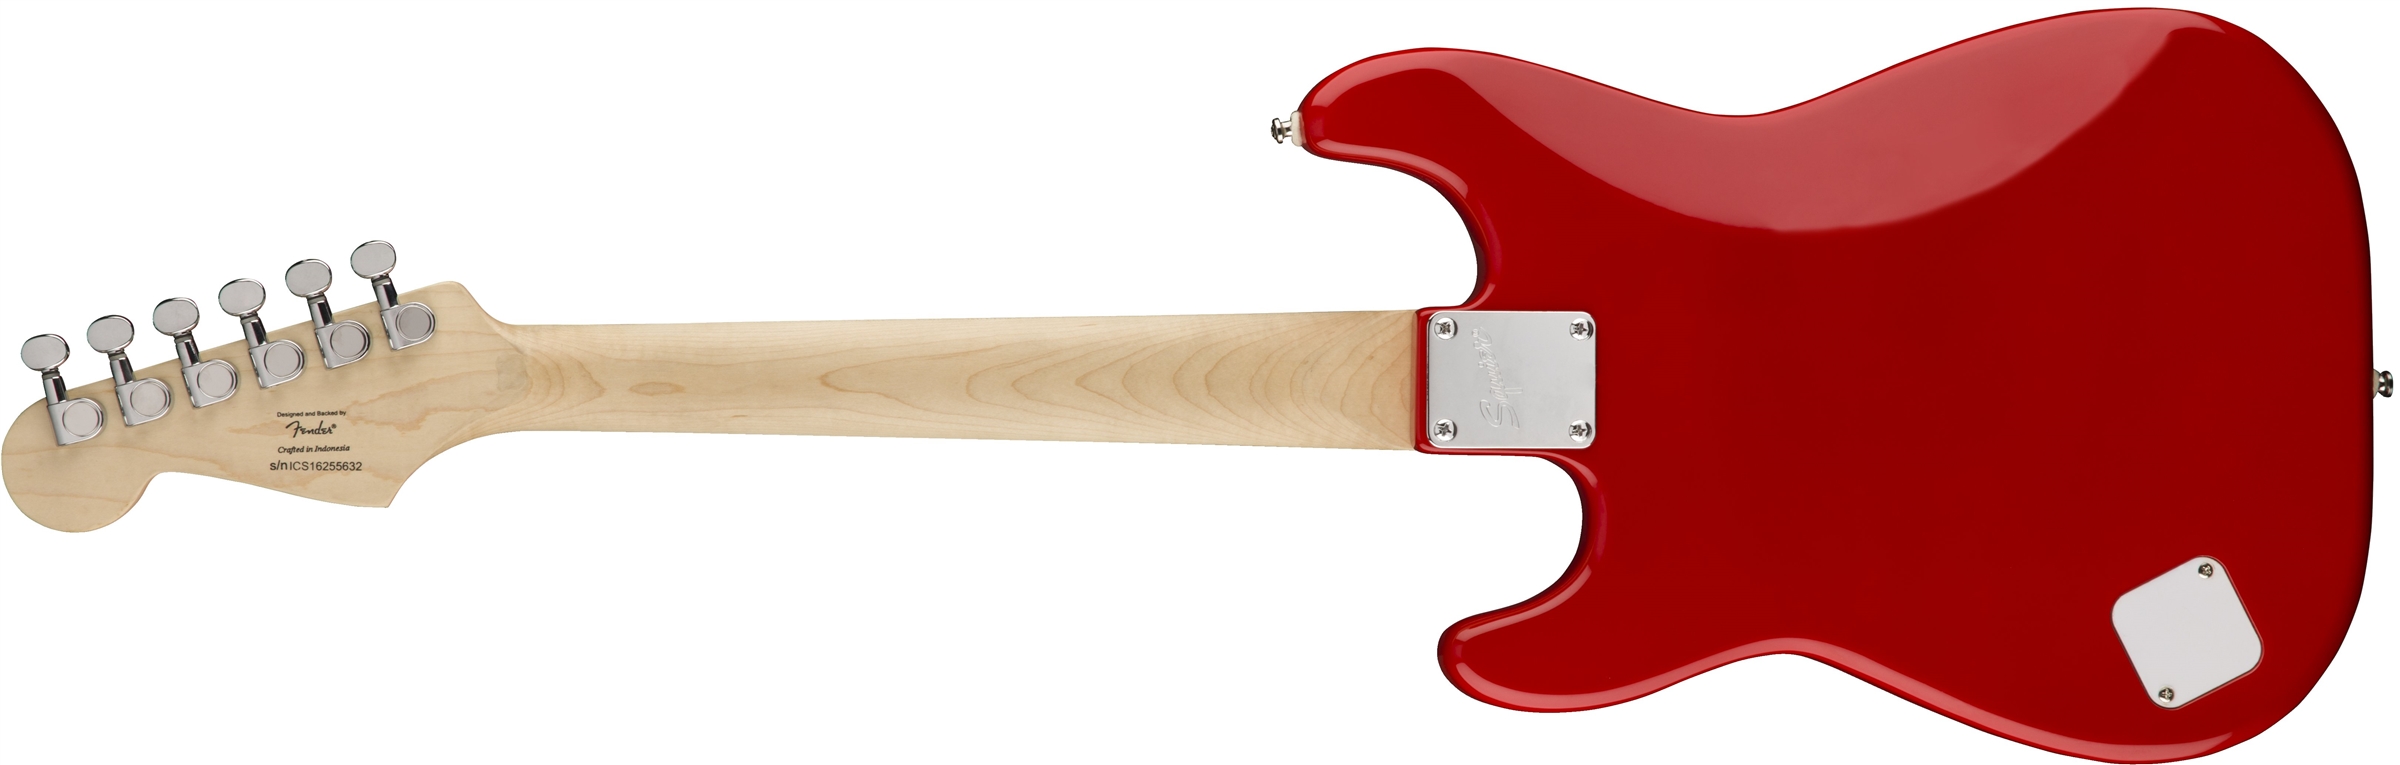 Squier Strat Mini V2 Sss Ht Rw - Torino Red - E-Gitarre für Kinder - Variation 1